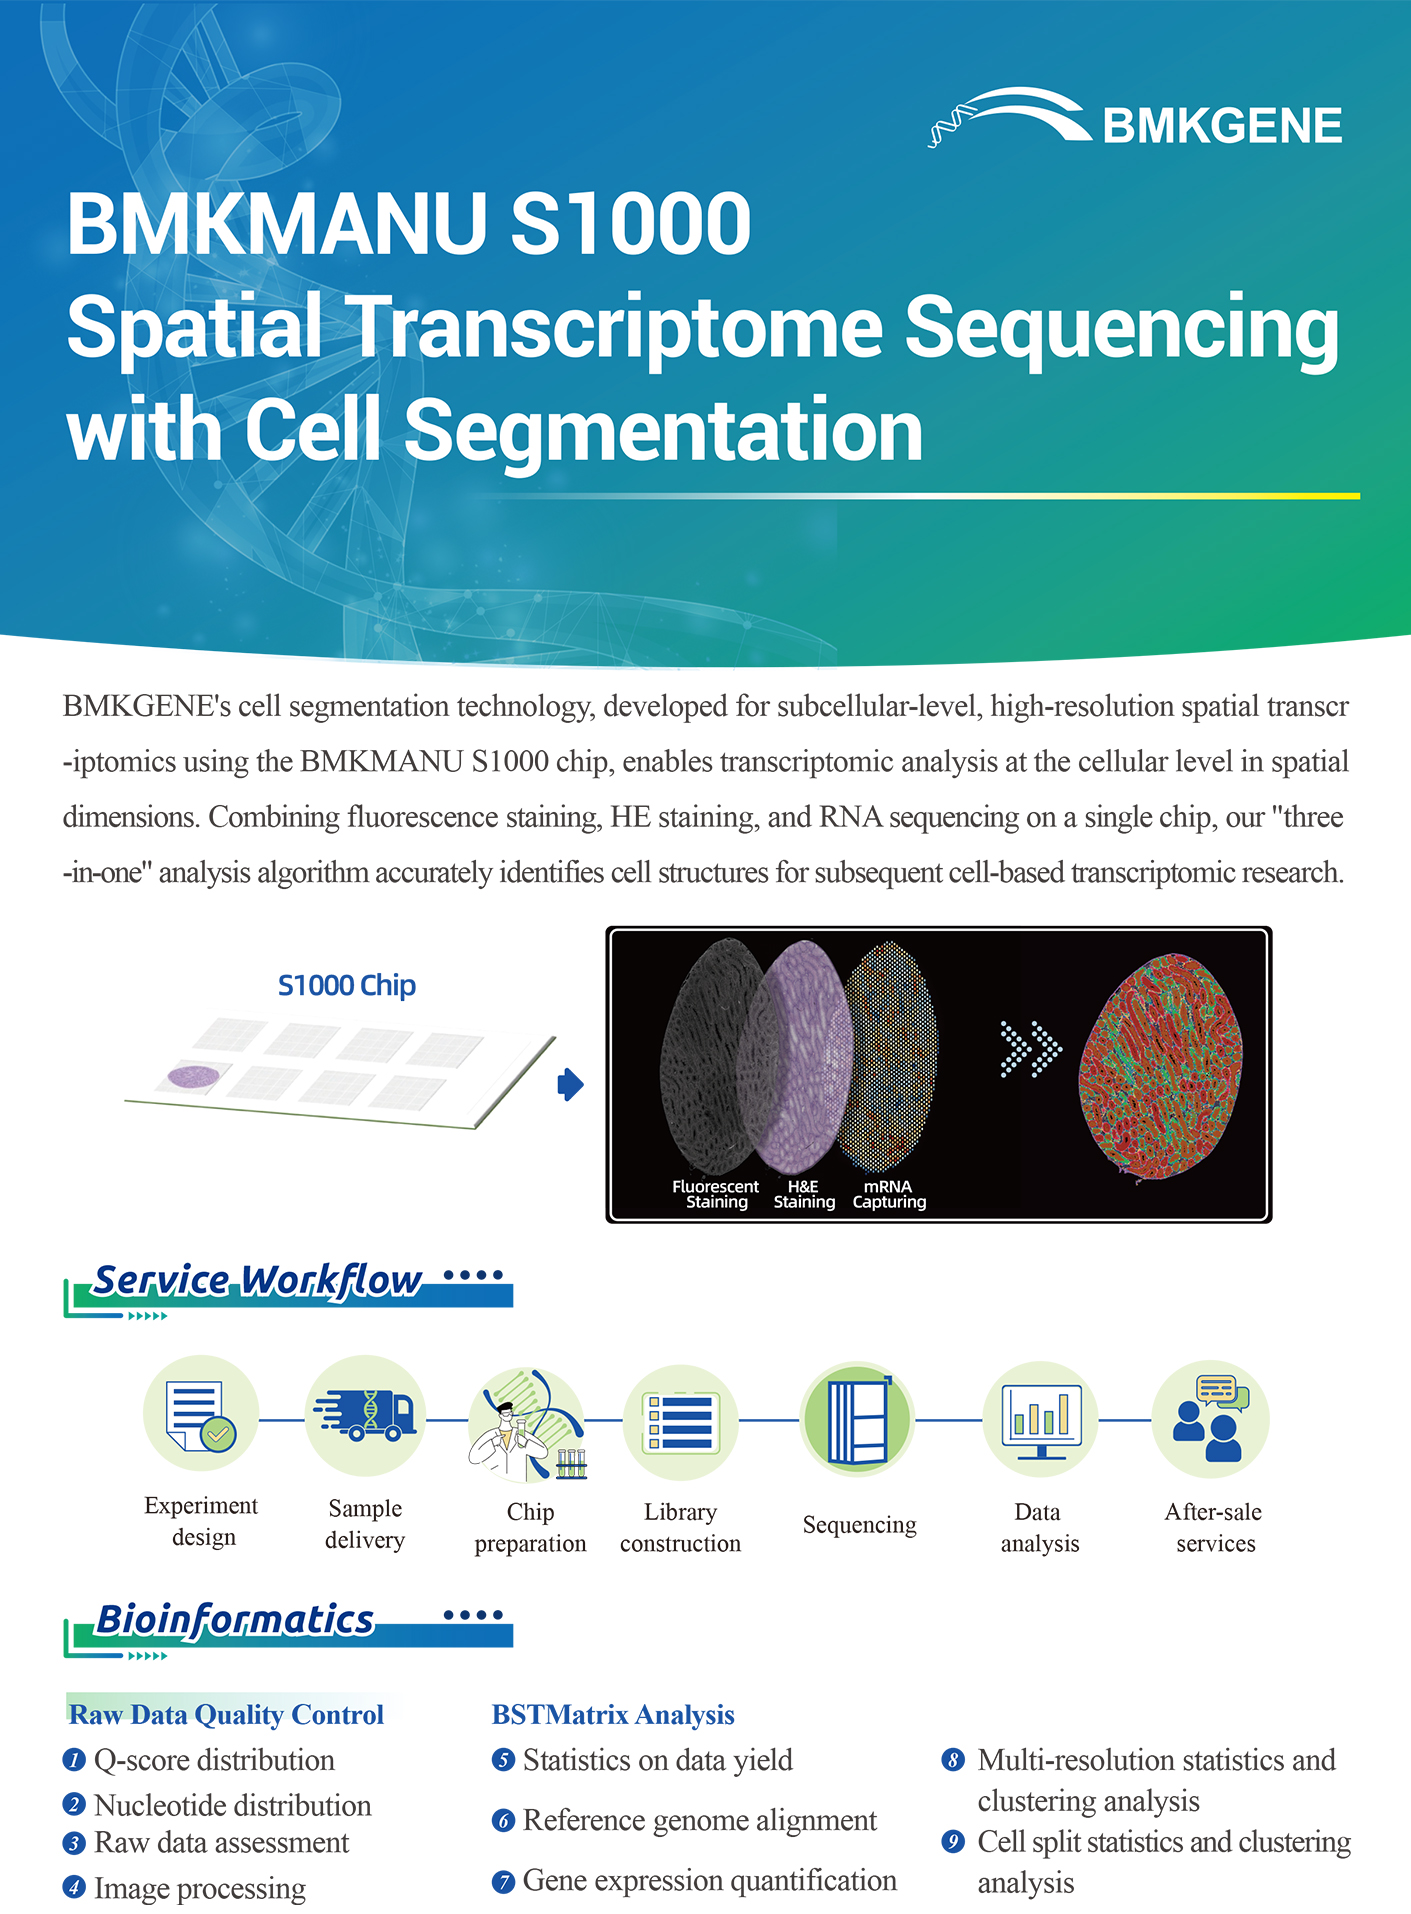 https://www.bmkgene.com/uploads/BMKMANU-S1000-Spatial-Transcriptome-Sequencing-with-Cell-Segmentation-BMKGENE-2311.pdf